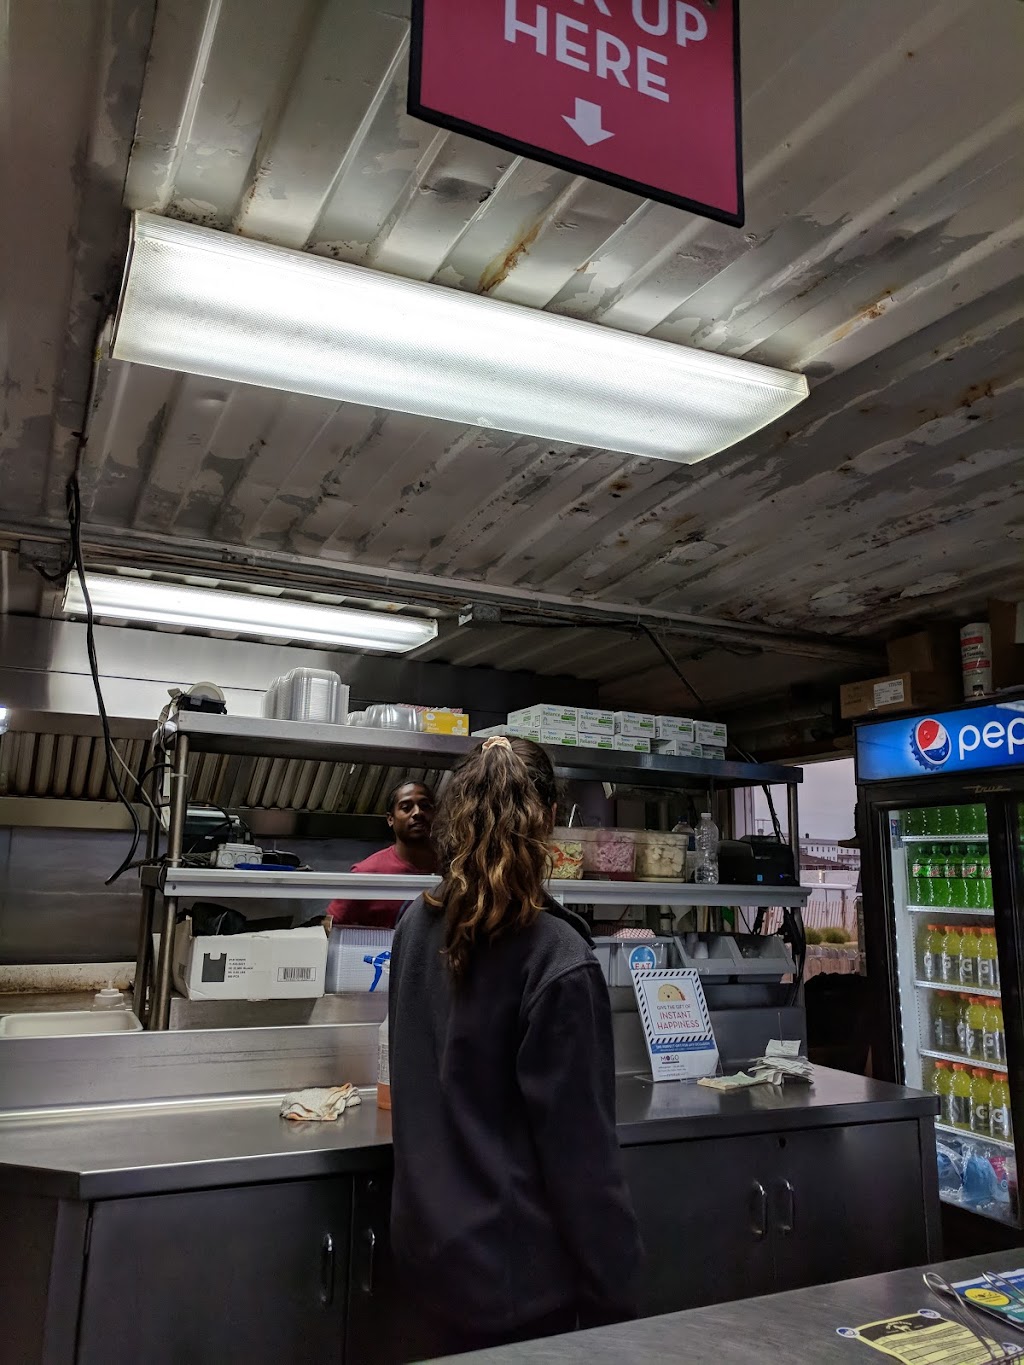 MOGO Korean Fusion Tacos | 850 Ocean Ave N, Asbury Park, NJ 07712 | Phone: (732) 894-9188